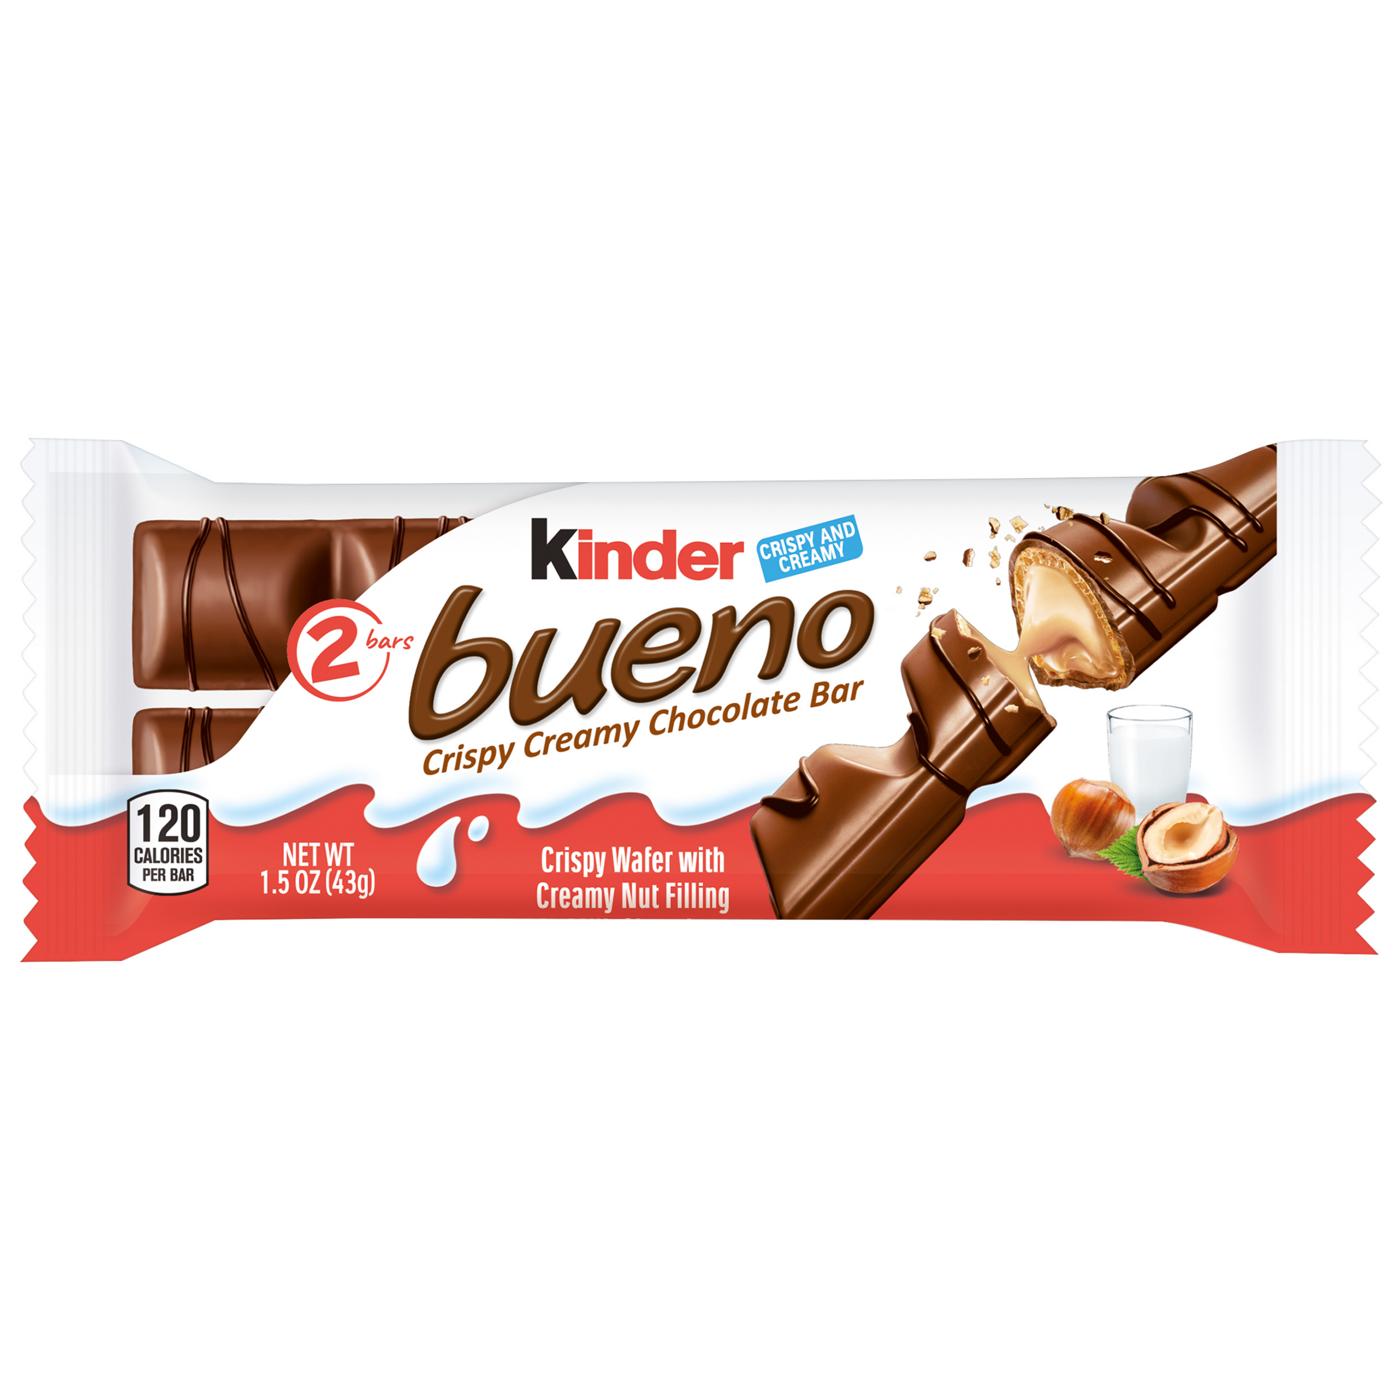 Kinder Bueno Crispy Chocolate Candy Bars; image 1 of 5